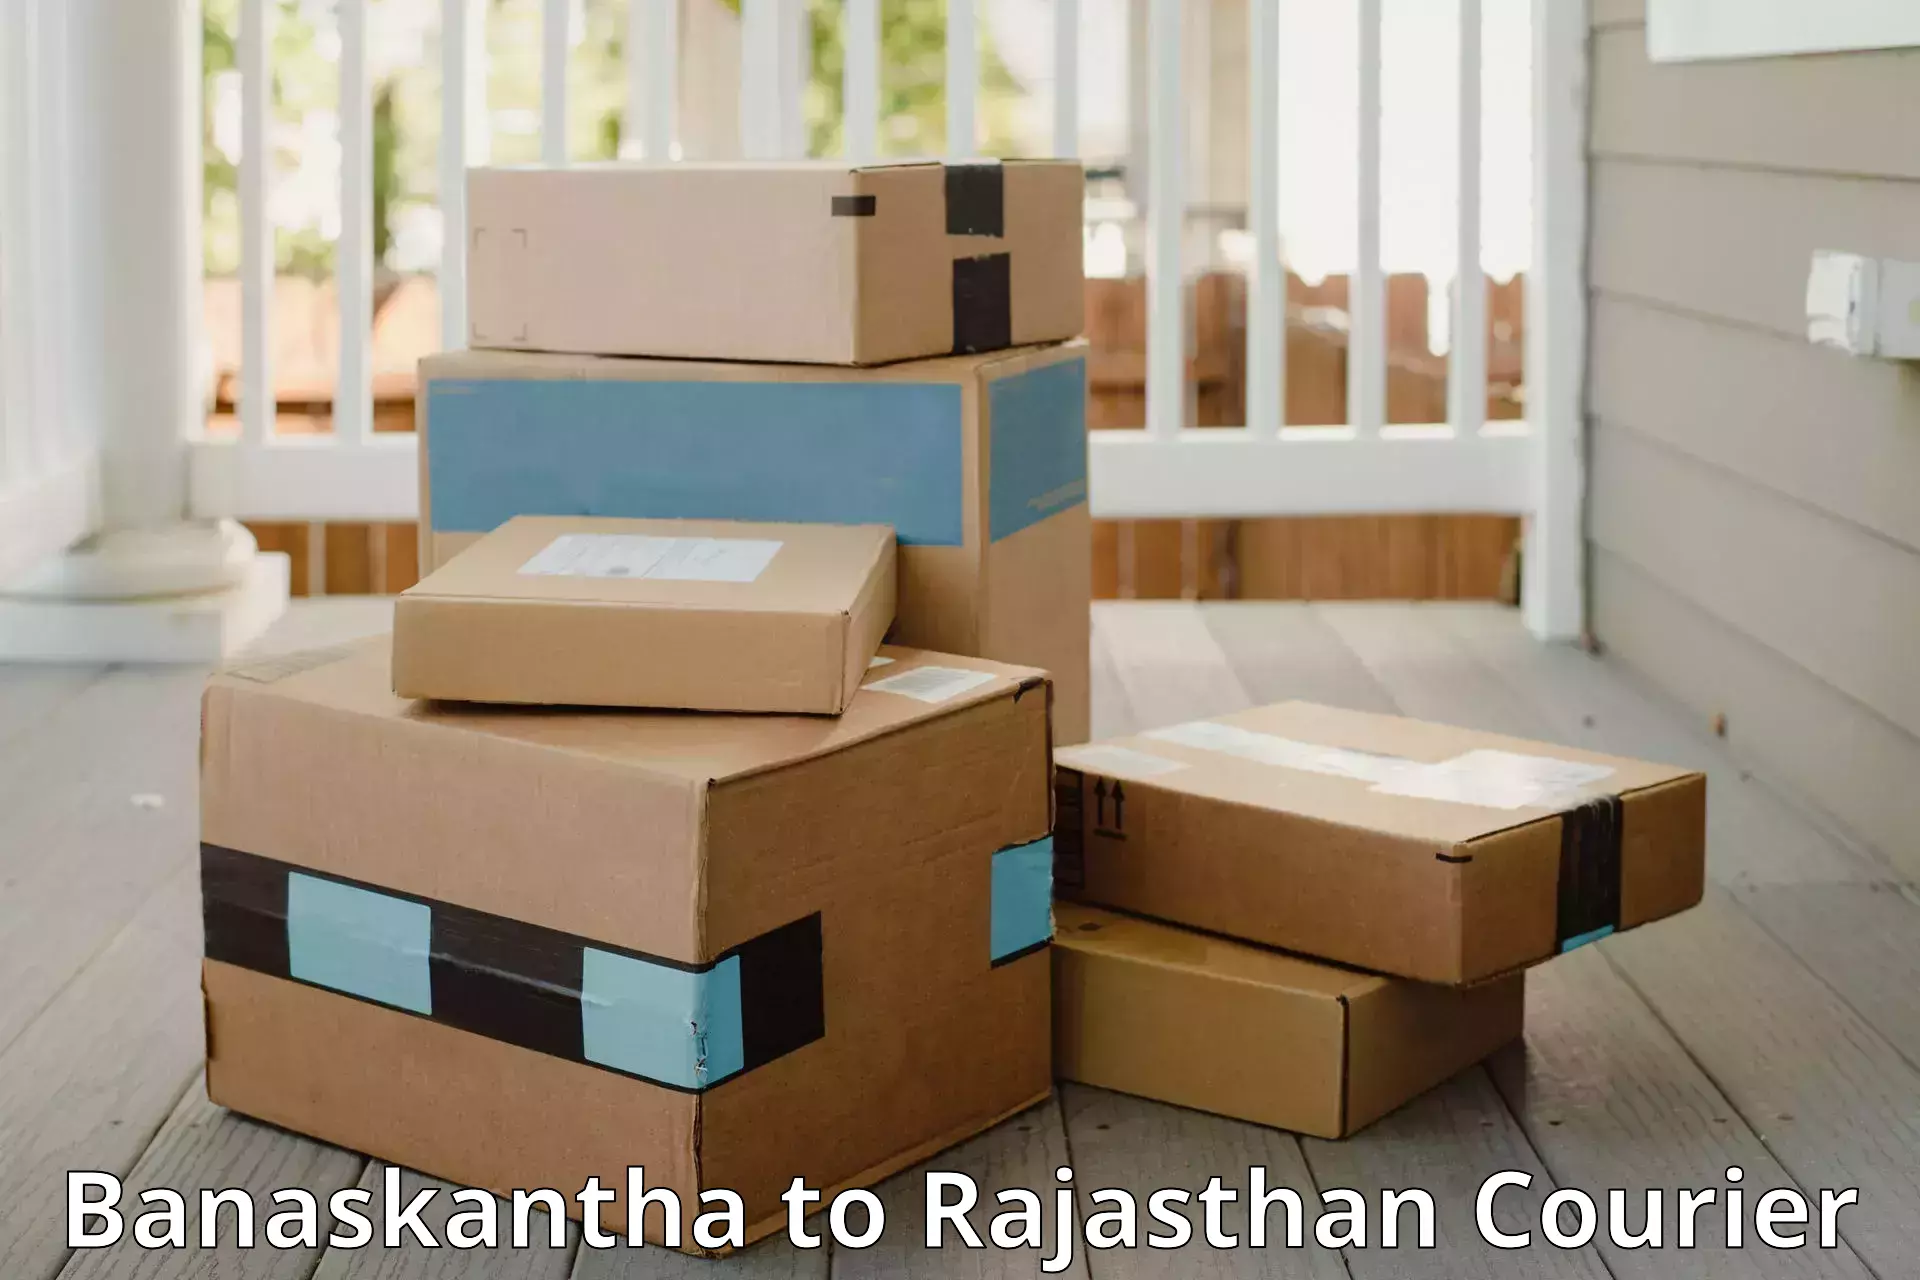 Luggage delivery app Banaskantha to Pokhran